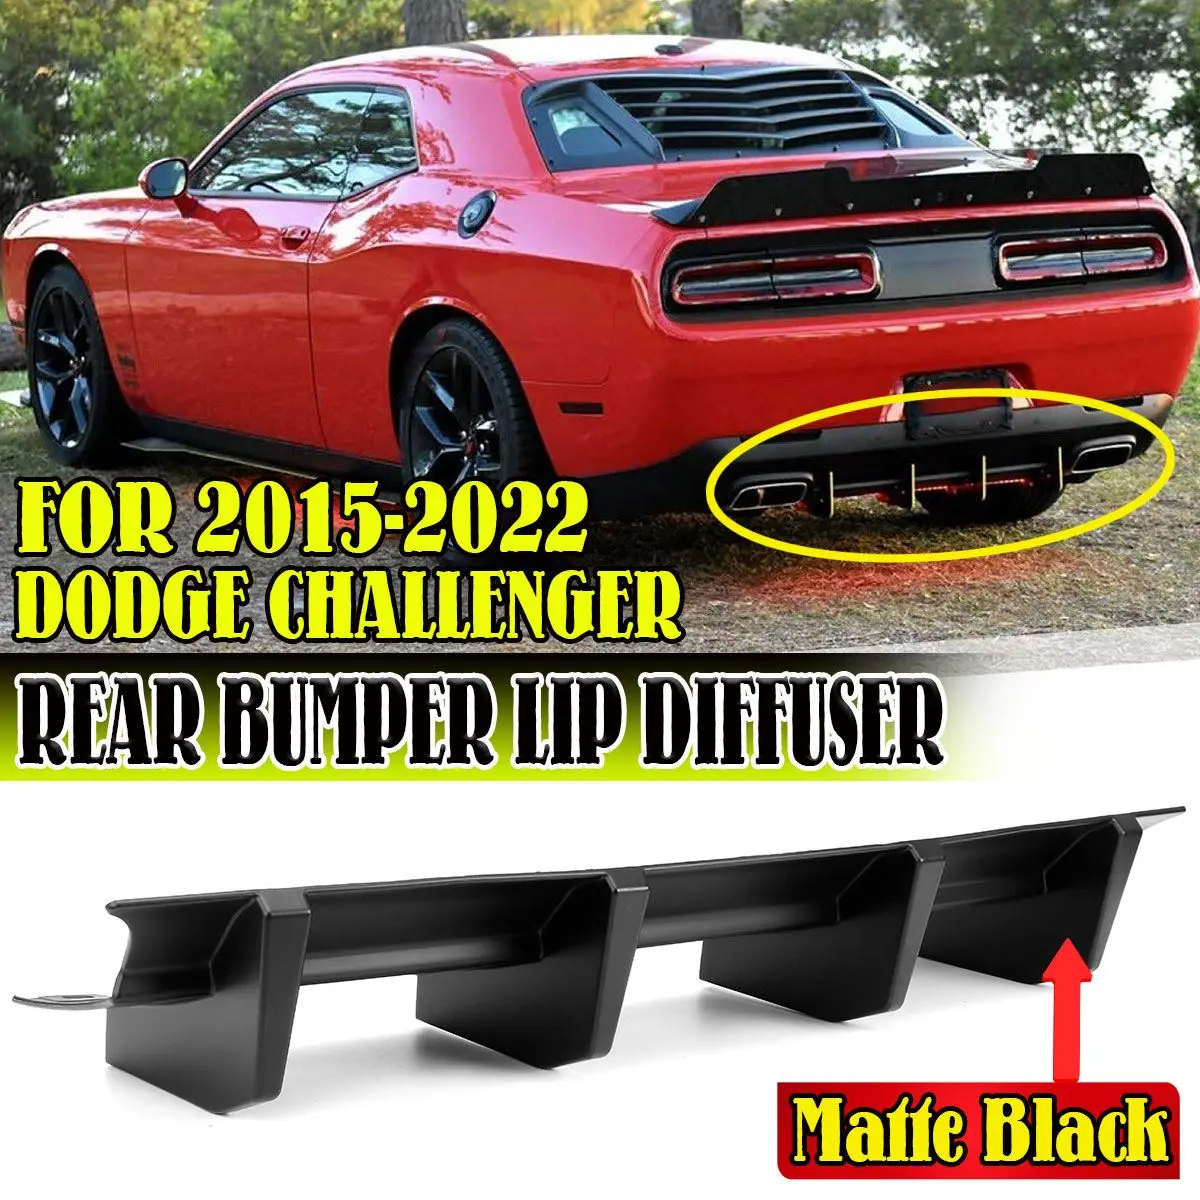 

Car Rear Bumper Diffuser Cover Trim Shark Fin Spoiler Lip For Dodge Challenger 2015-2022 Rear Chassis Diffuser Splitter Guard